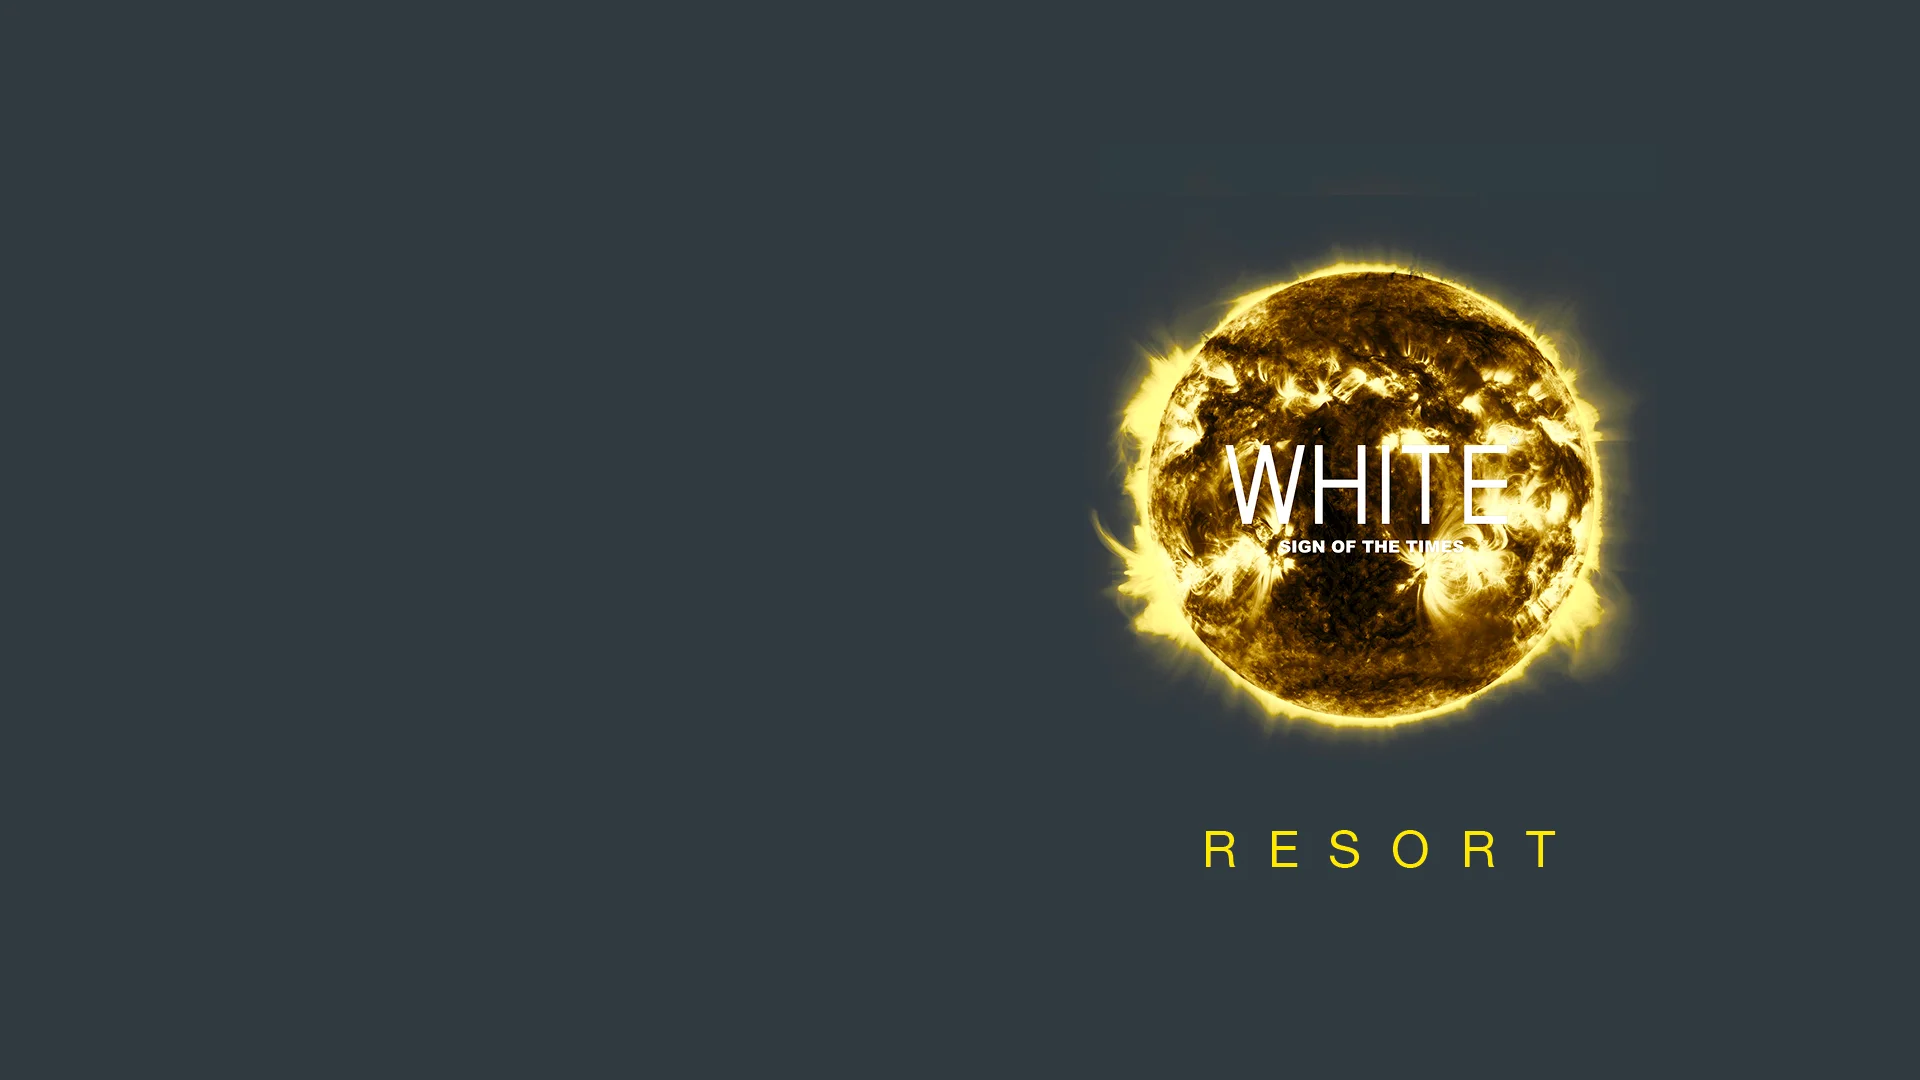 White resort